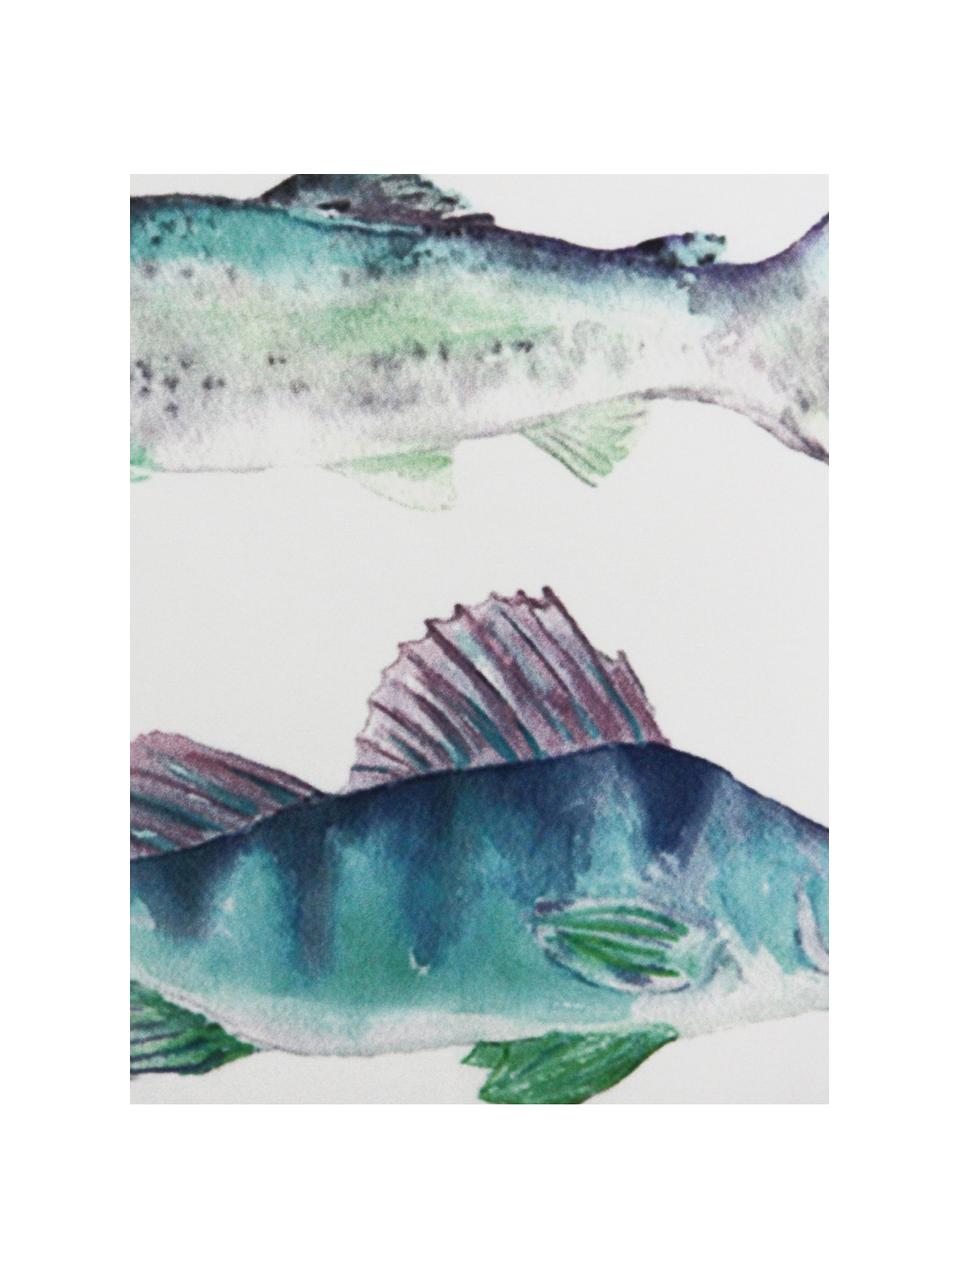 Kissenhülle Fish mit Motiv in Aquarelloptik, 100% Polyester, Weiss, Blau-, Grün, Lilatöne, 45 x 45 cm